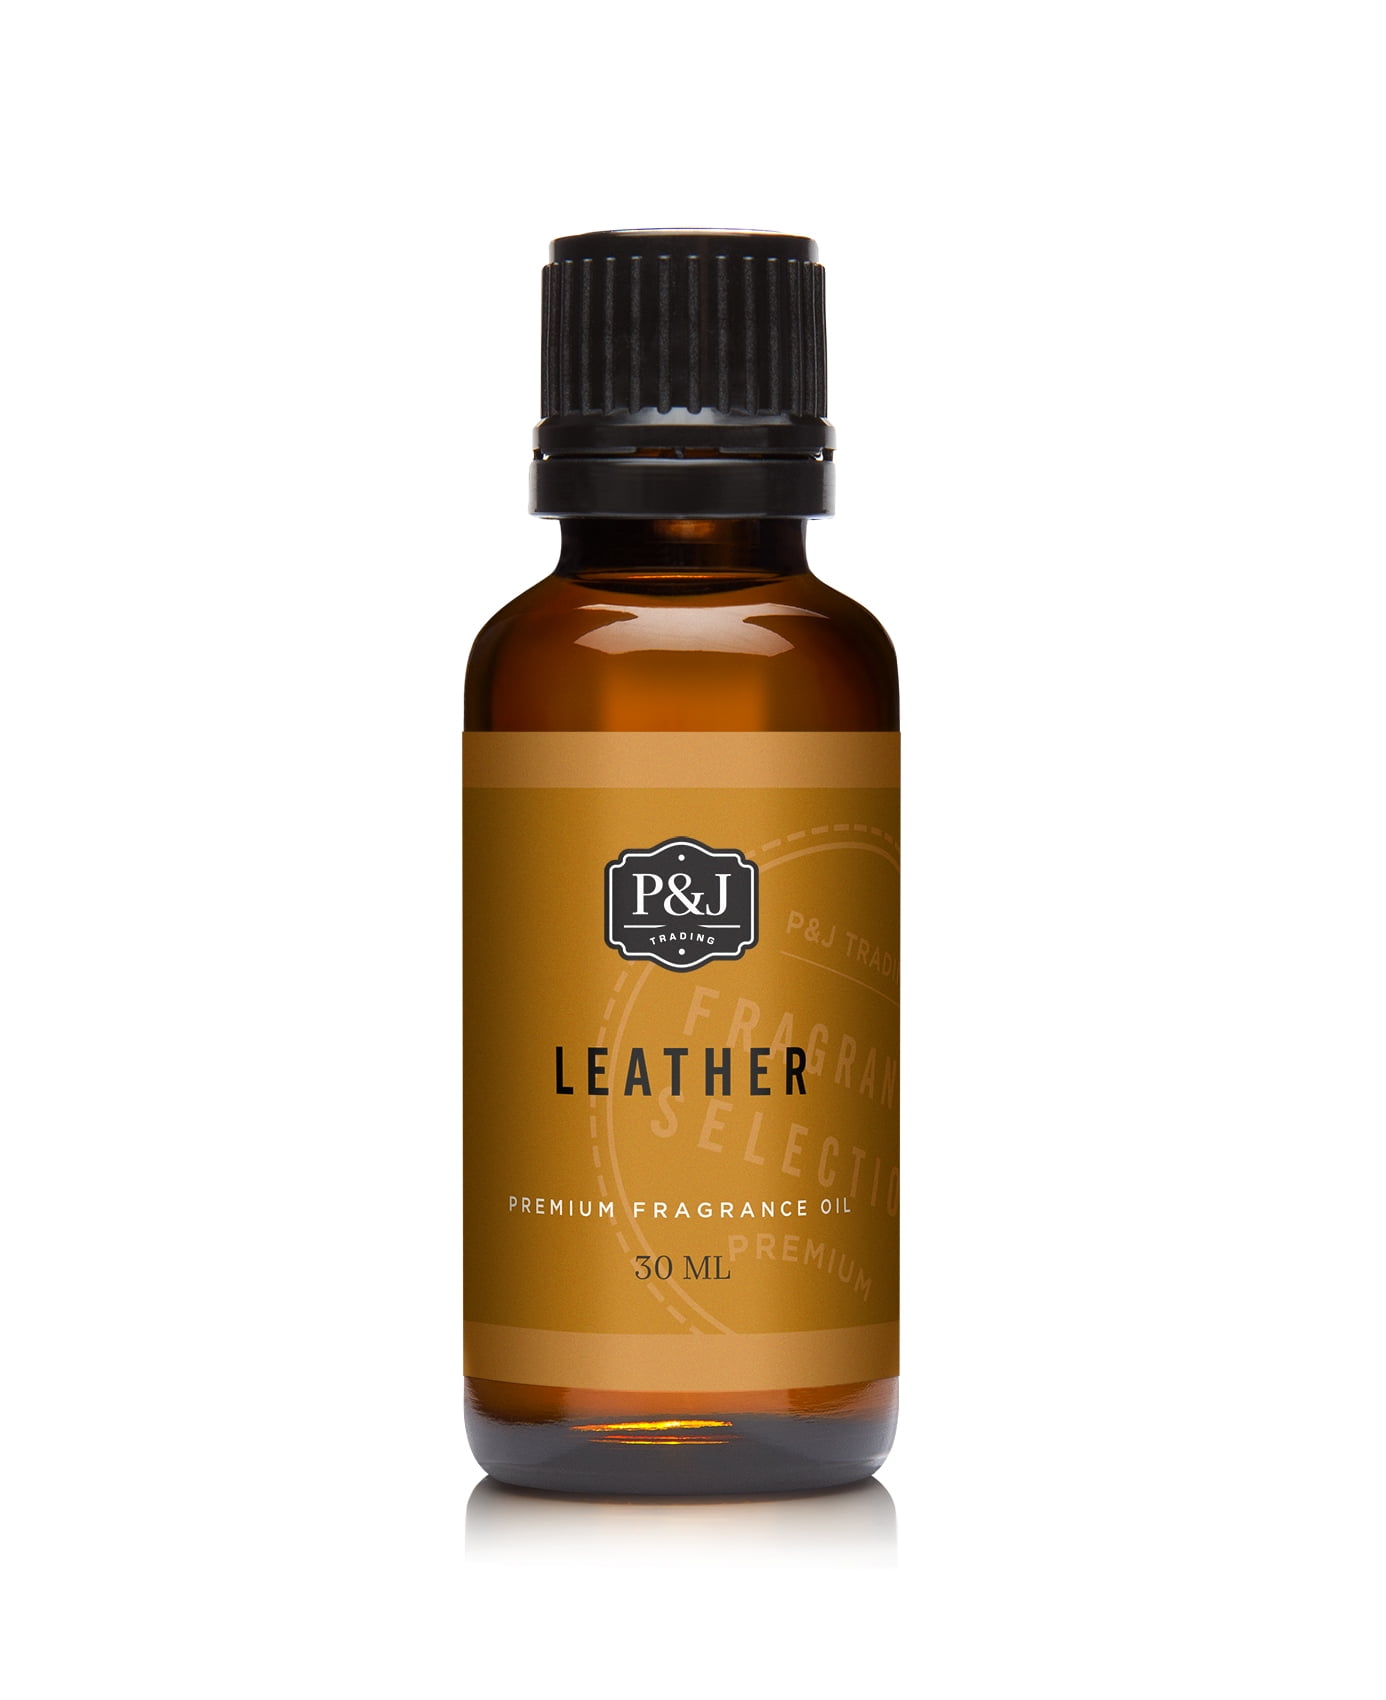 P&j Trading Leather Fragrance Oil - Premium Grade Scented Oil - 30ml